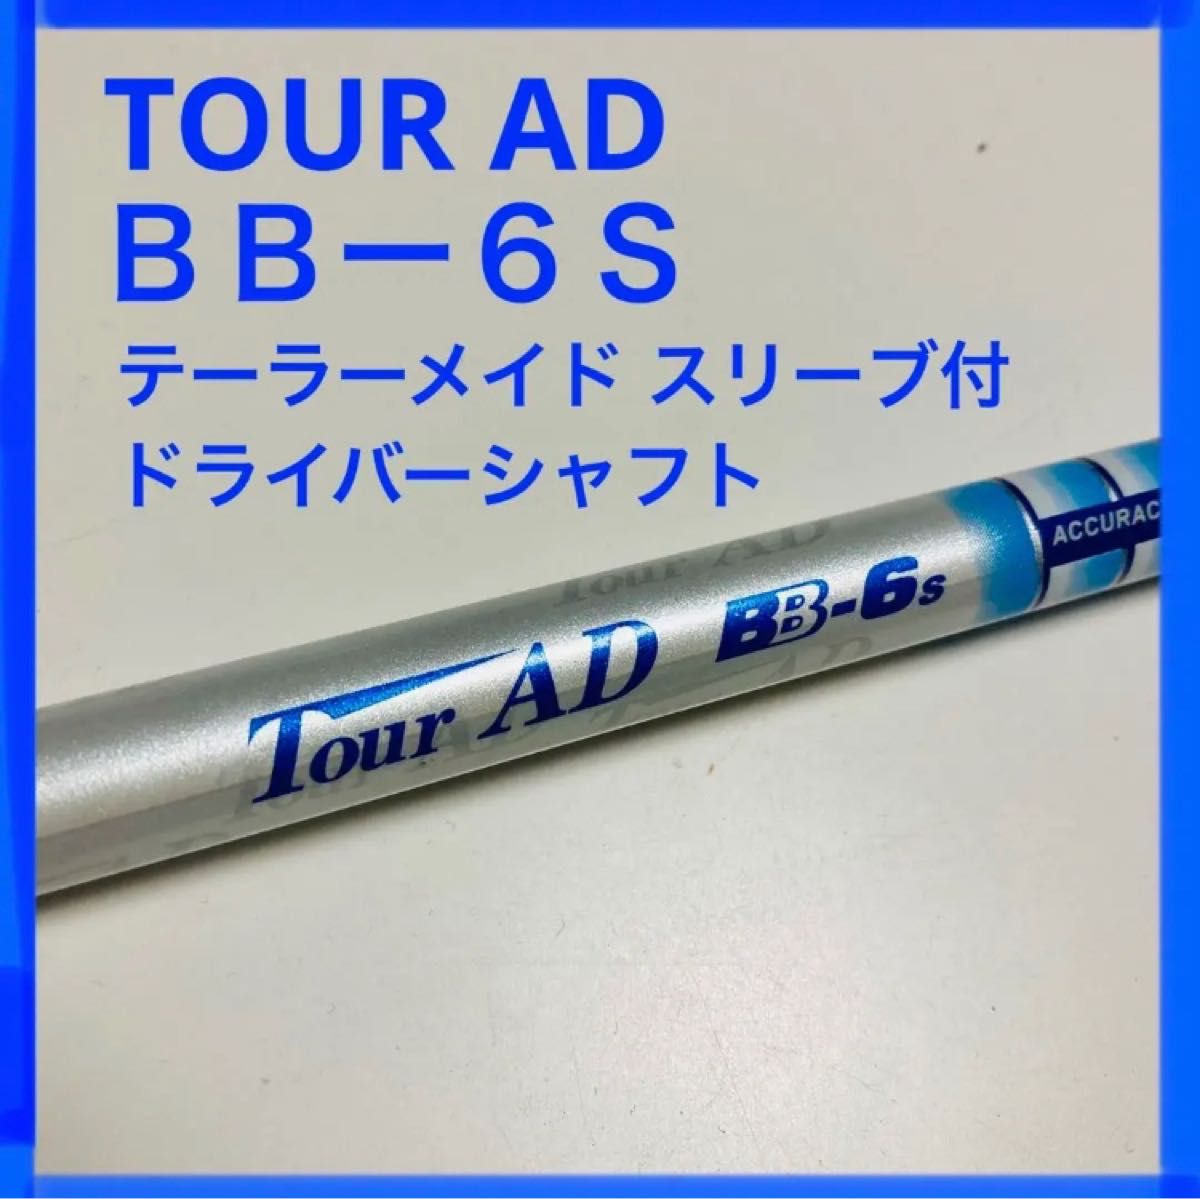 TOUR AD BB 6S 1W PING G400スリーブ-